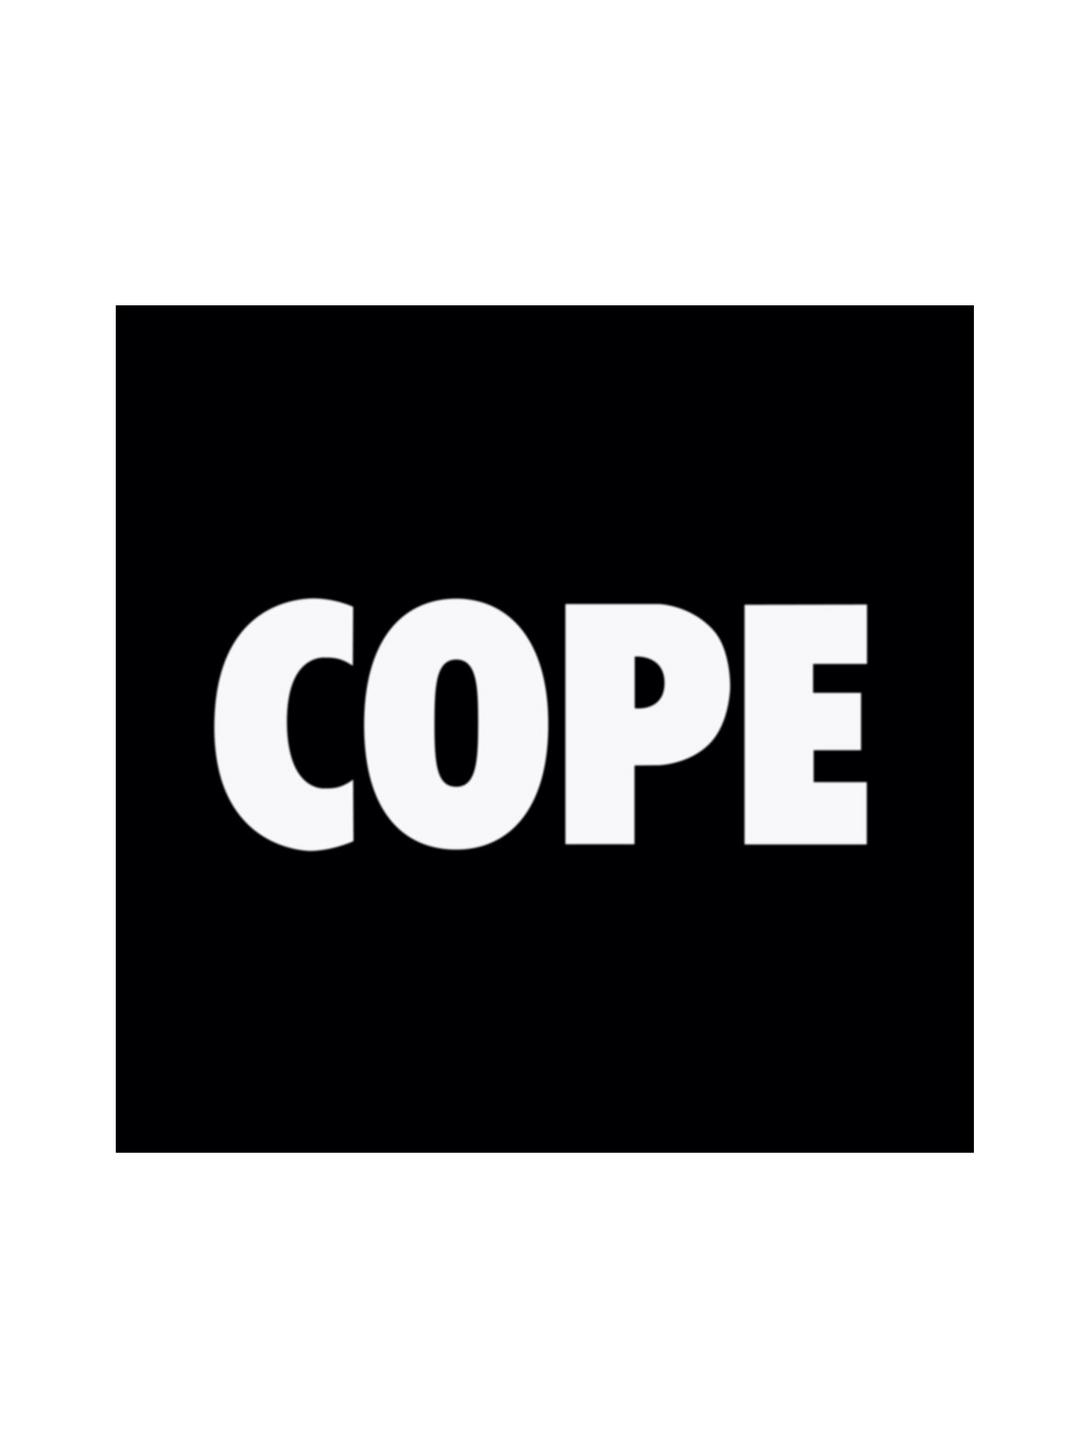 Manchester Orchestra  - Cope Vinyl LP, , hi-res